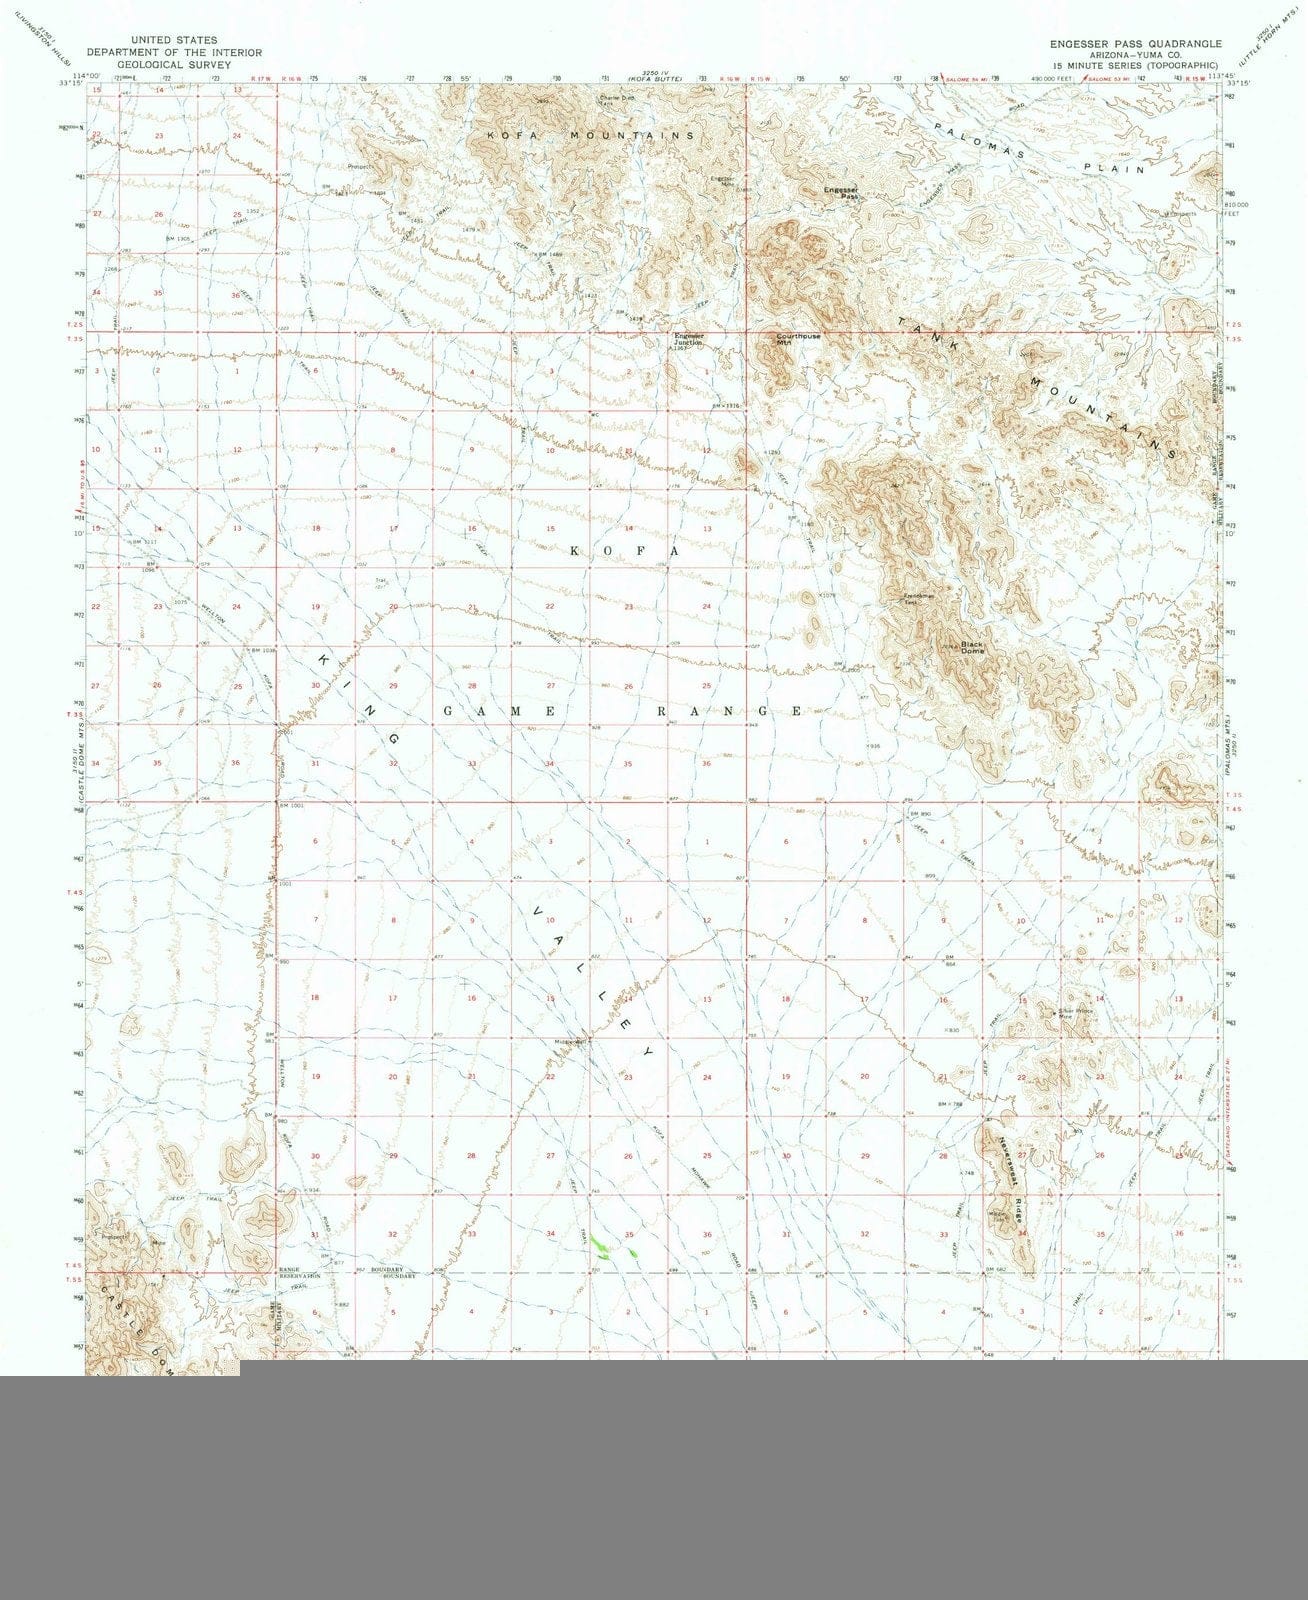 1965 Engesser Pass, AZ - Arizona - USGS Topographic Map